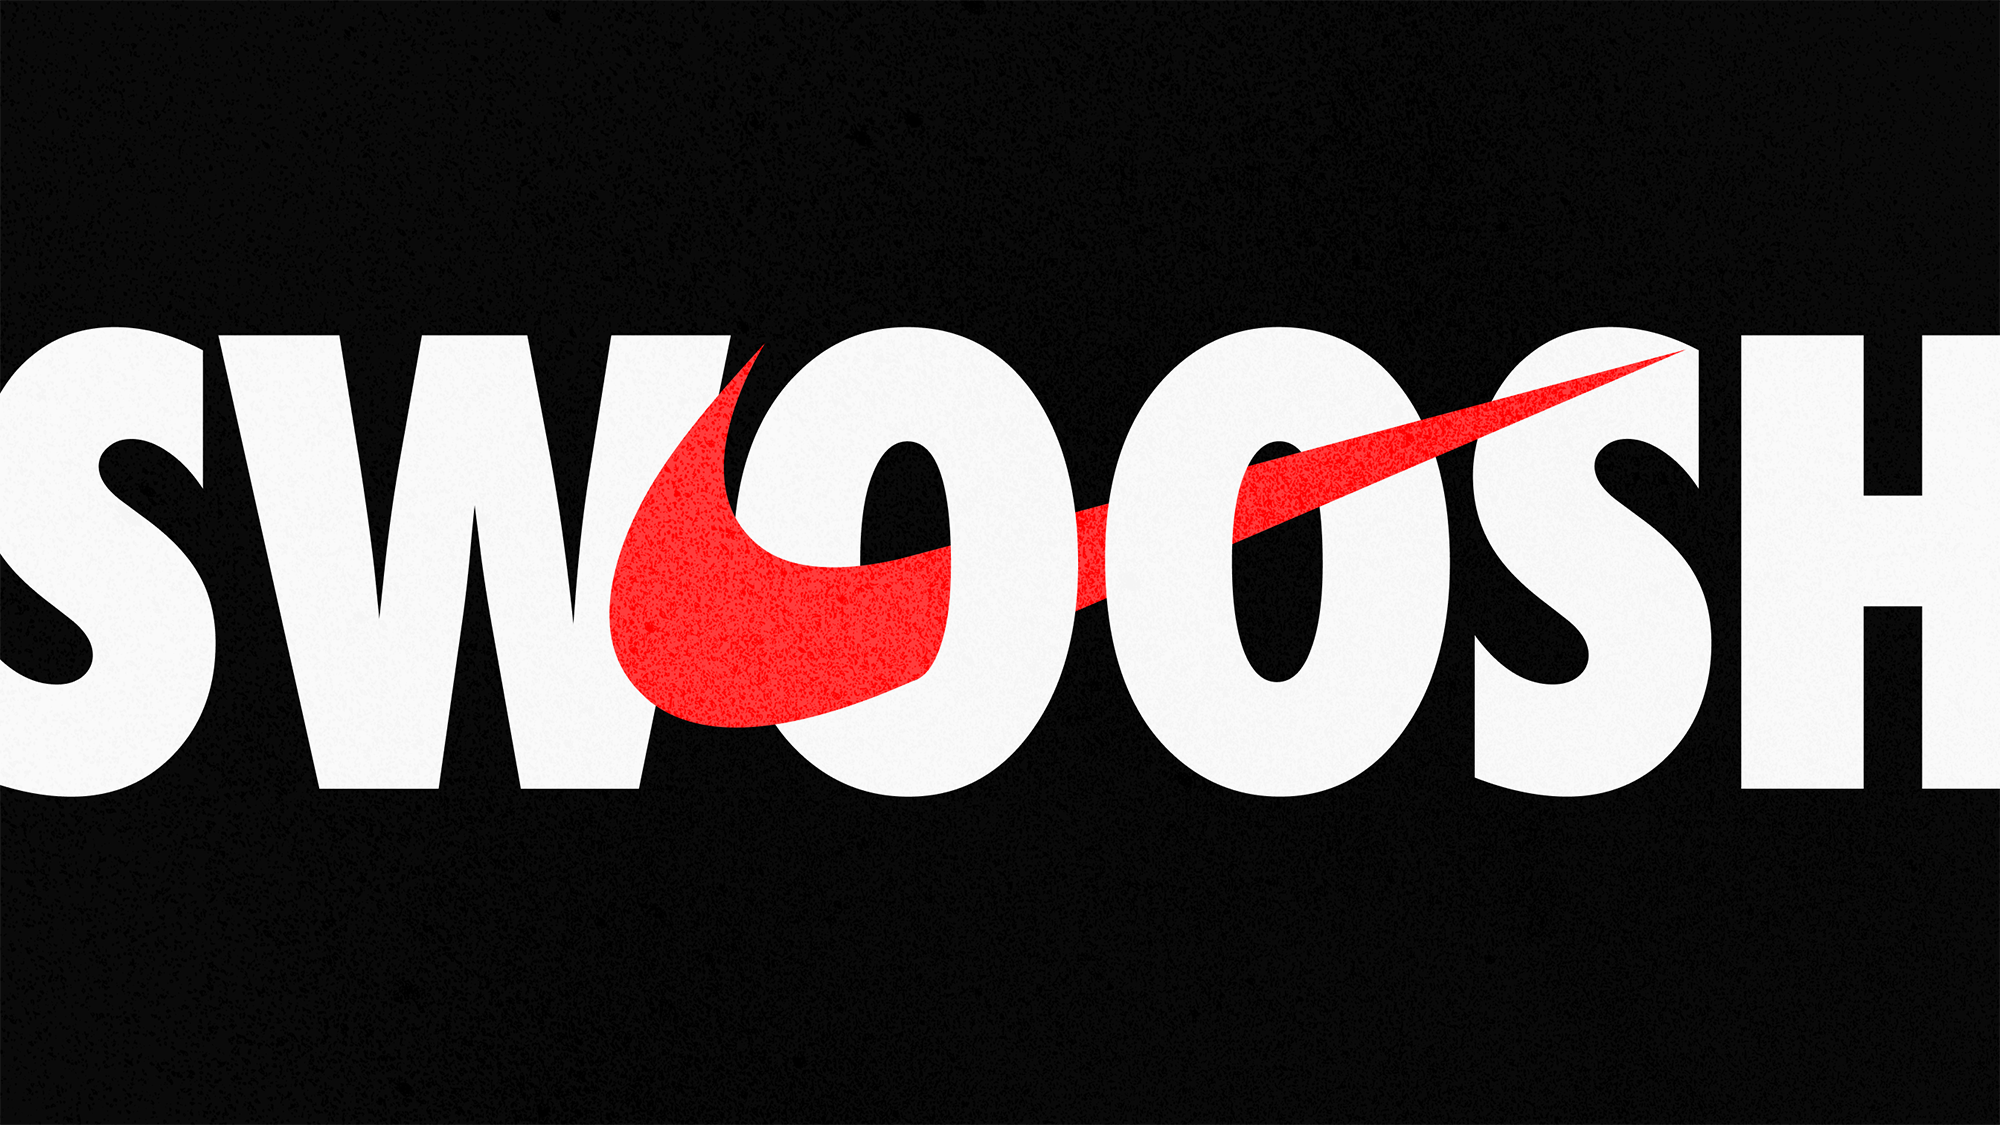 The famous swoosh logo through its wordmark